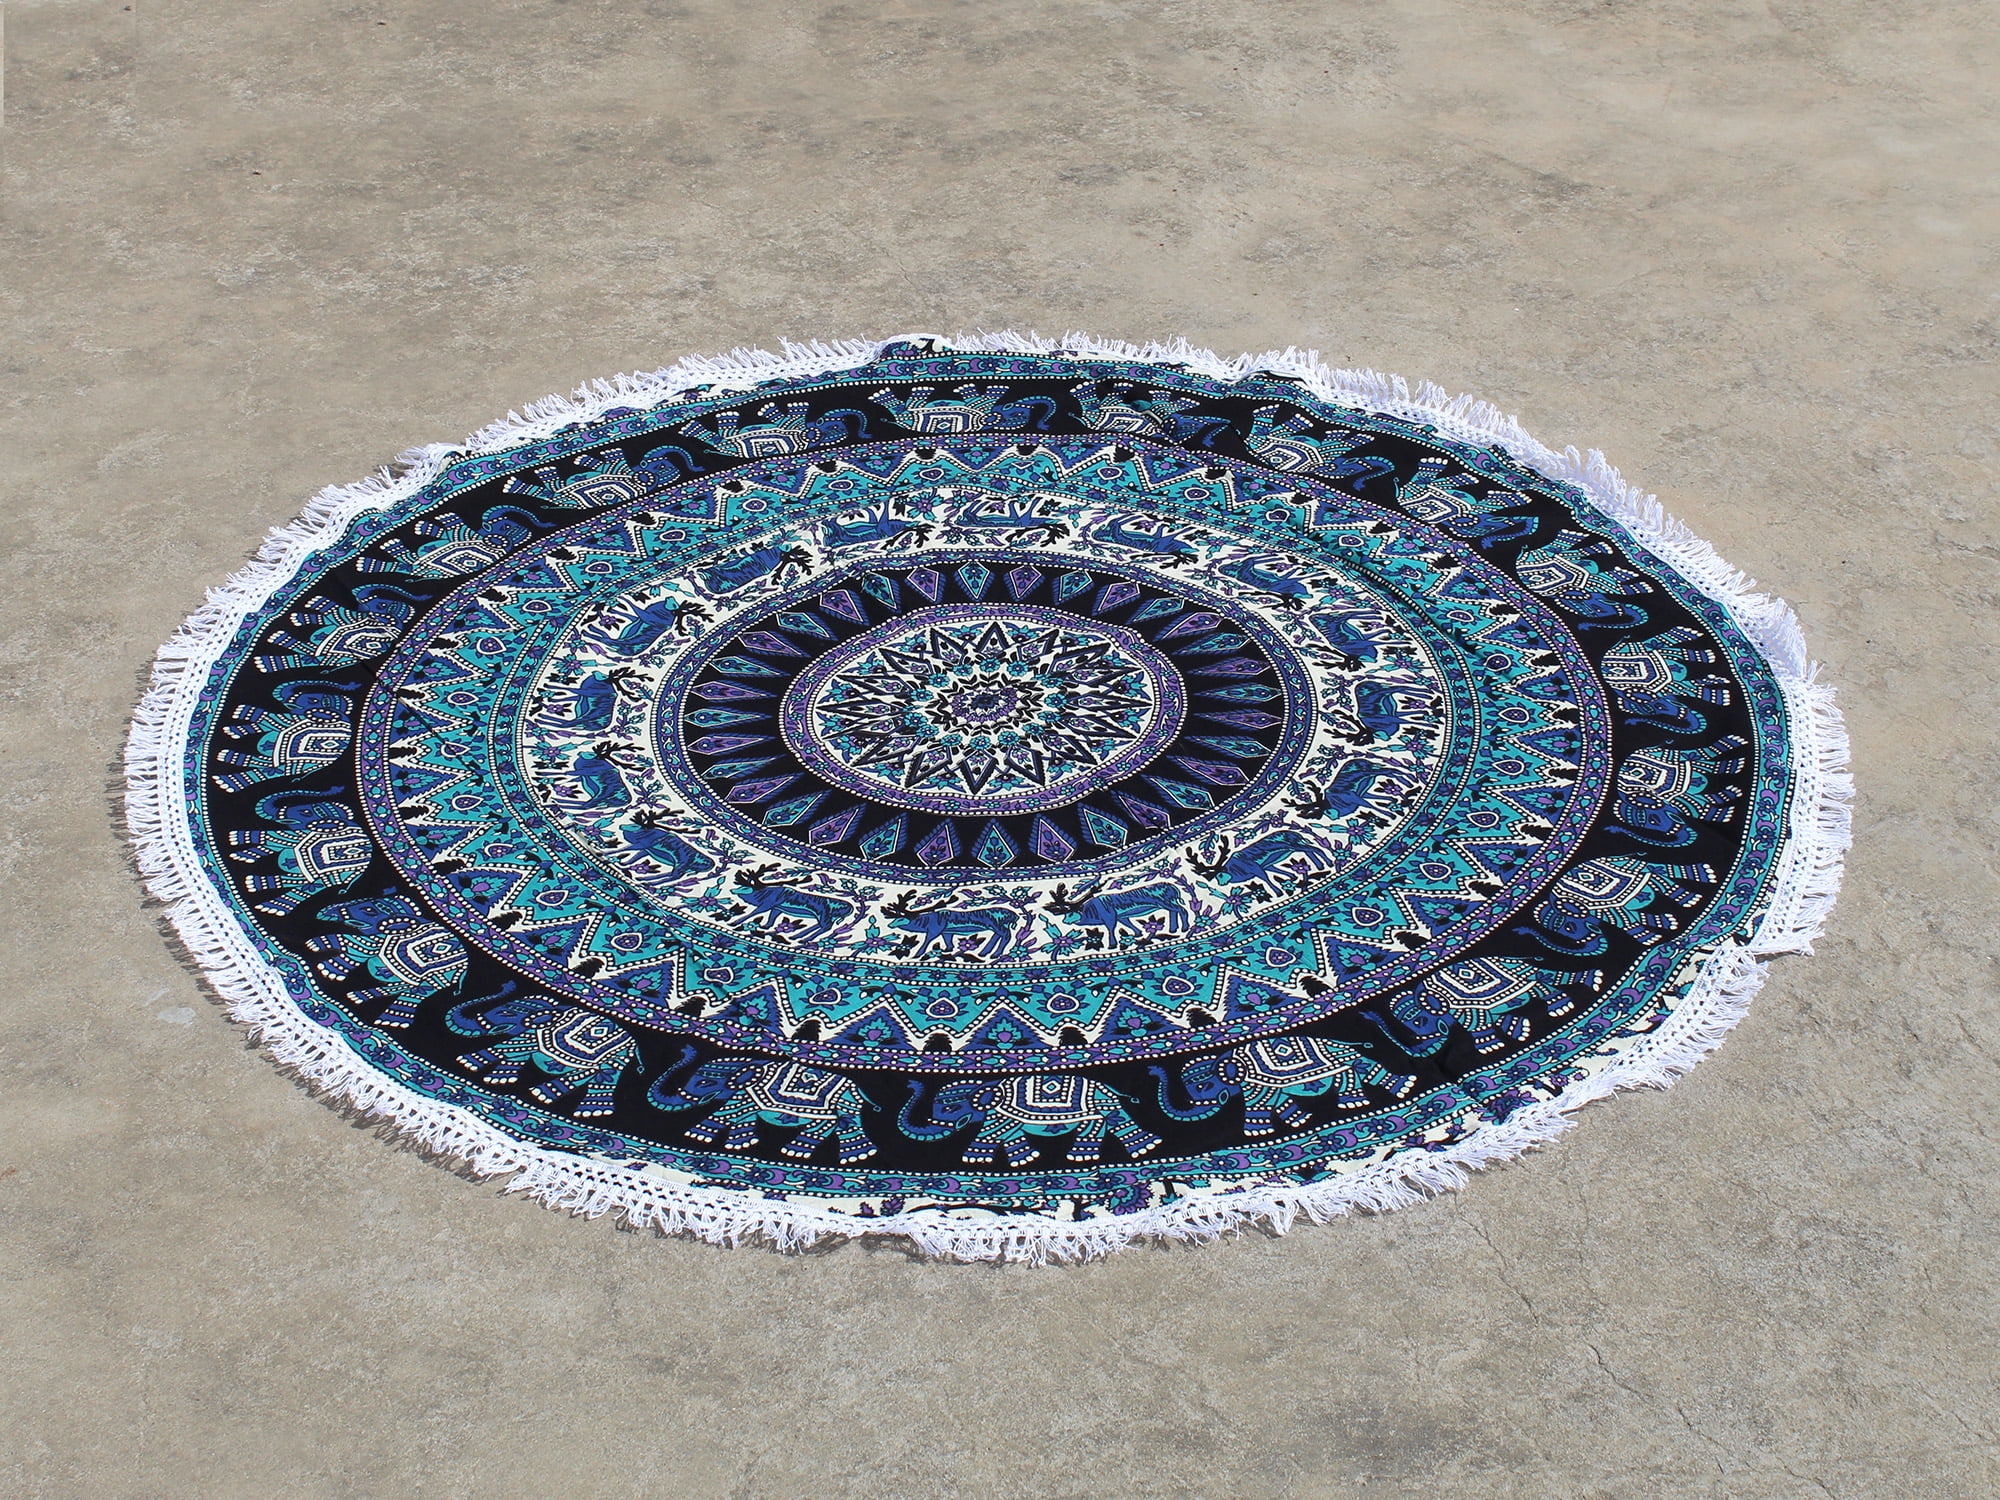 Peacock Mandala Tapestry Indian Round Cotton Table Decor Yoga Mat Beach Blanket 